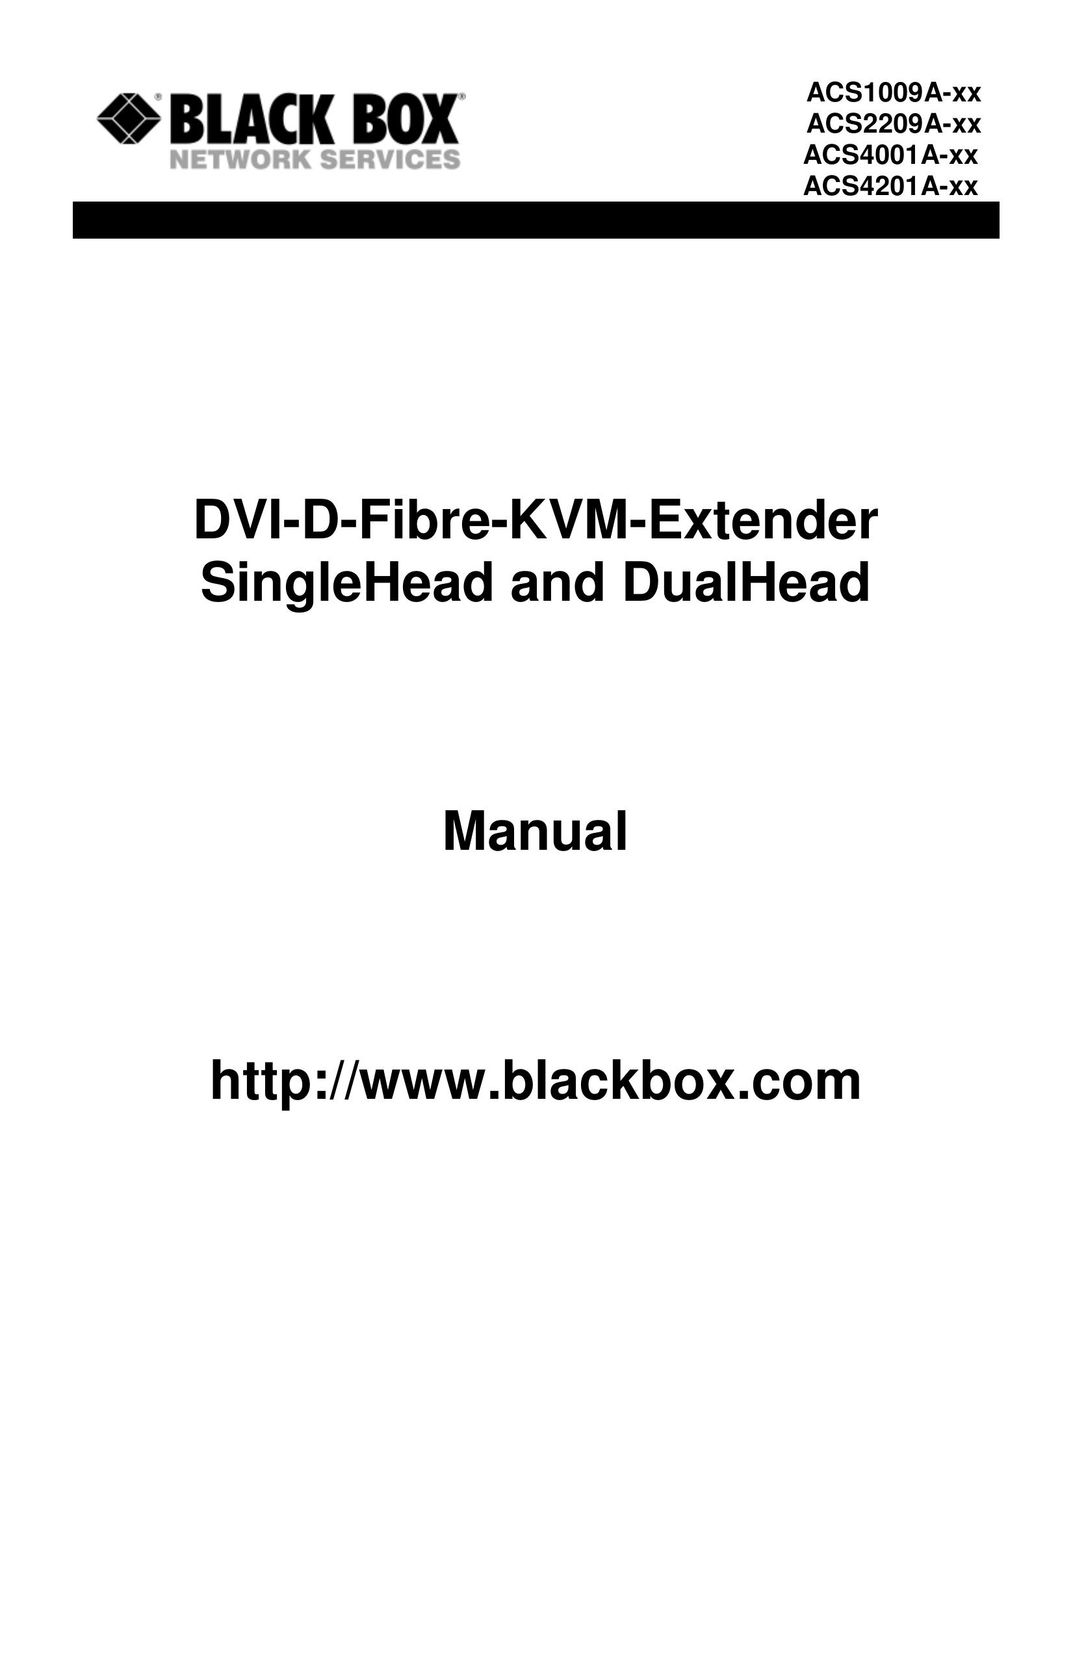 Black Box ACS4201A-xx Network Card User Manual